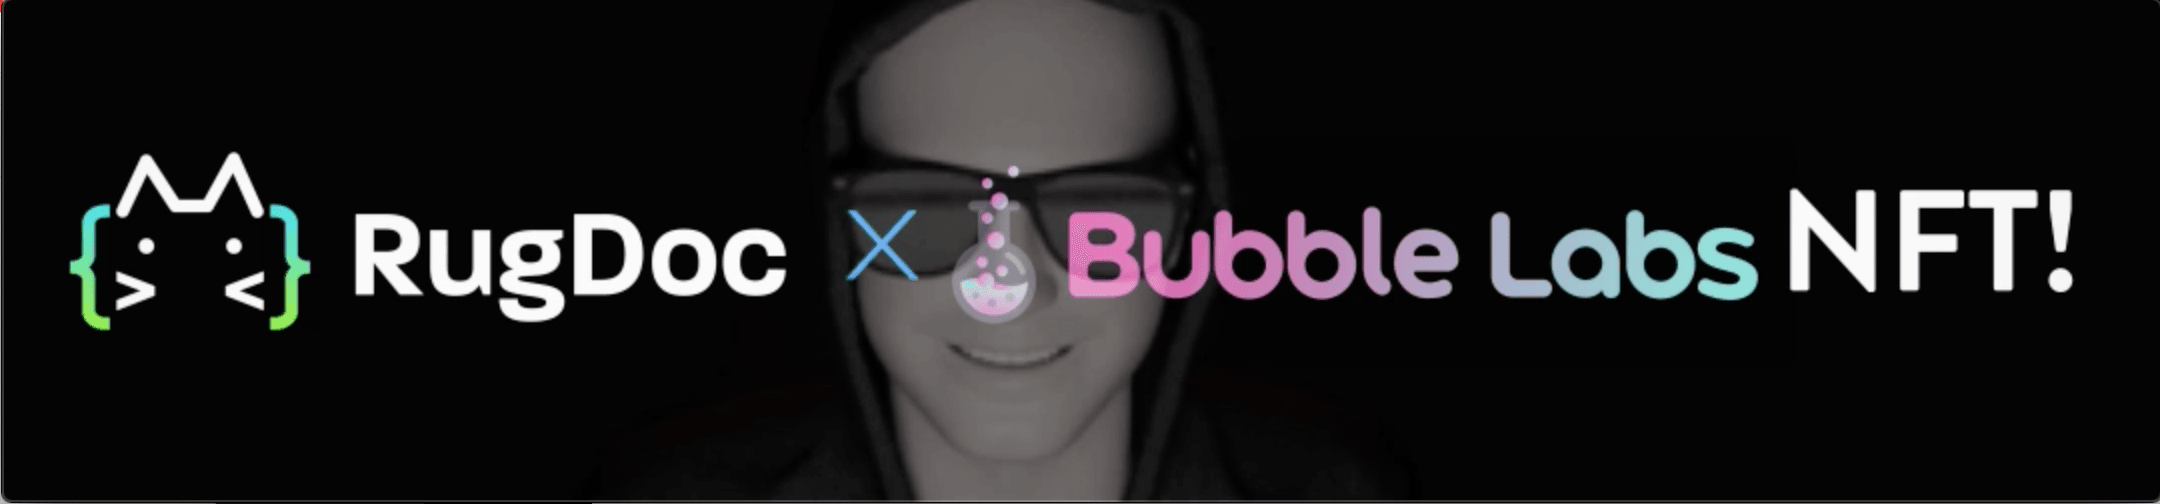 RugDoc-BubbleLabs 橫幅